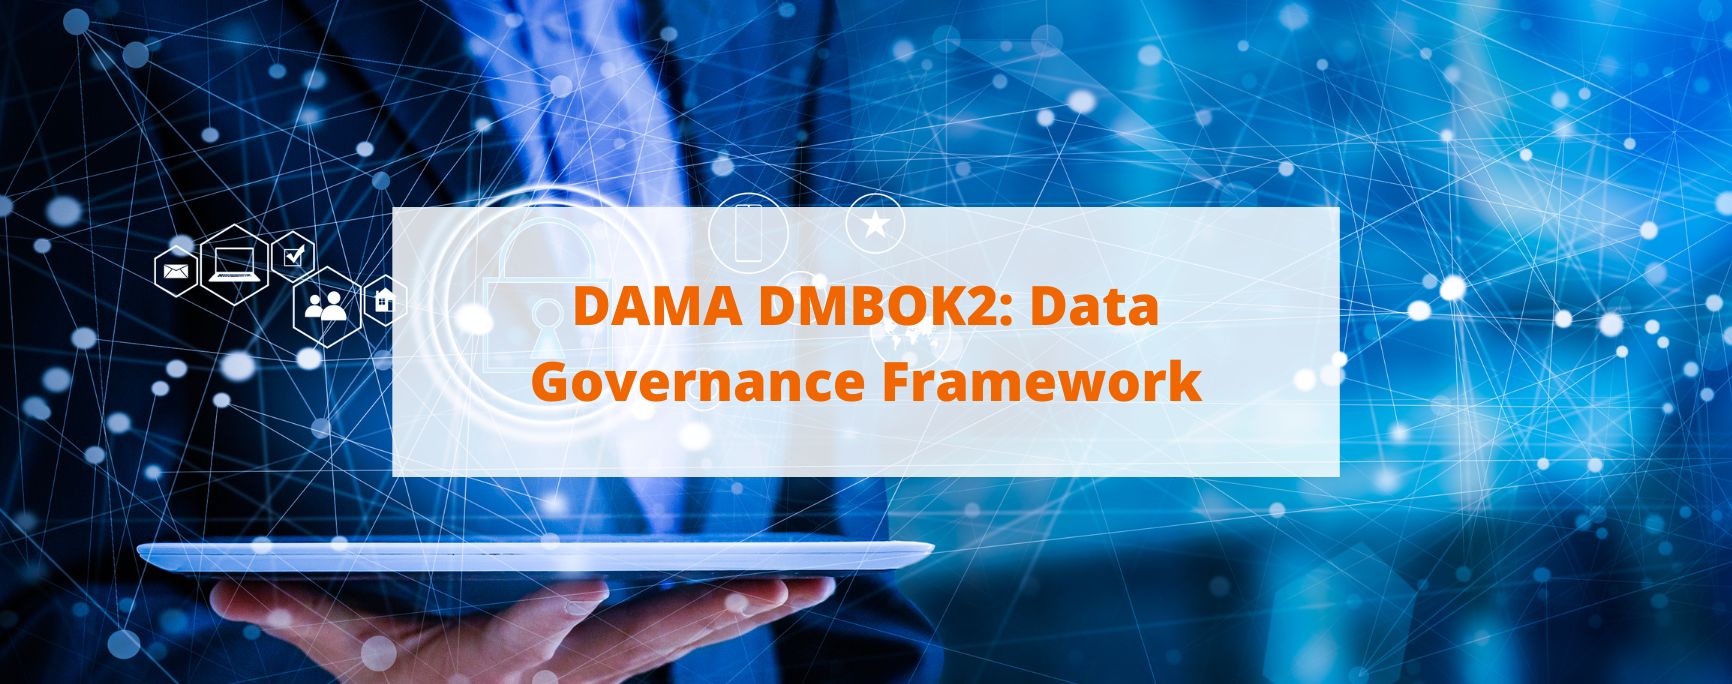 DAMA DMBOK2: Data Governance Framework